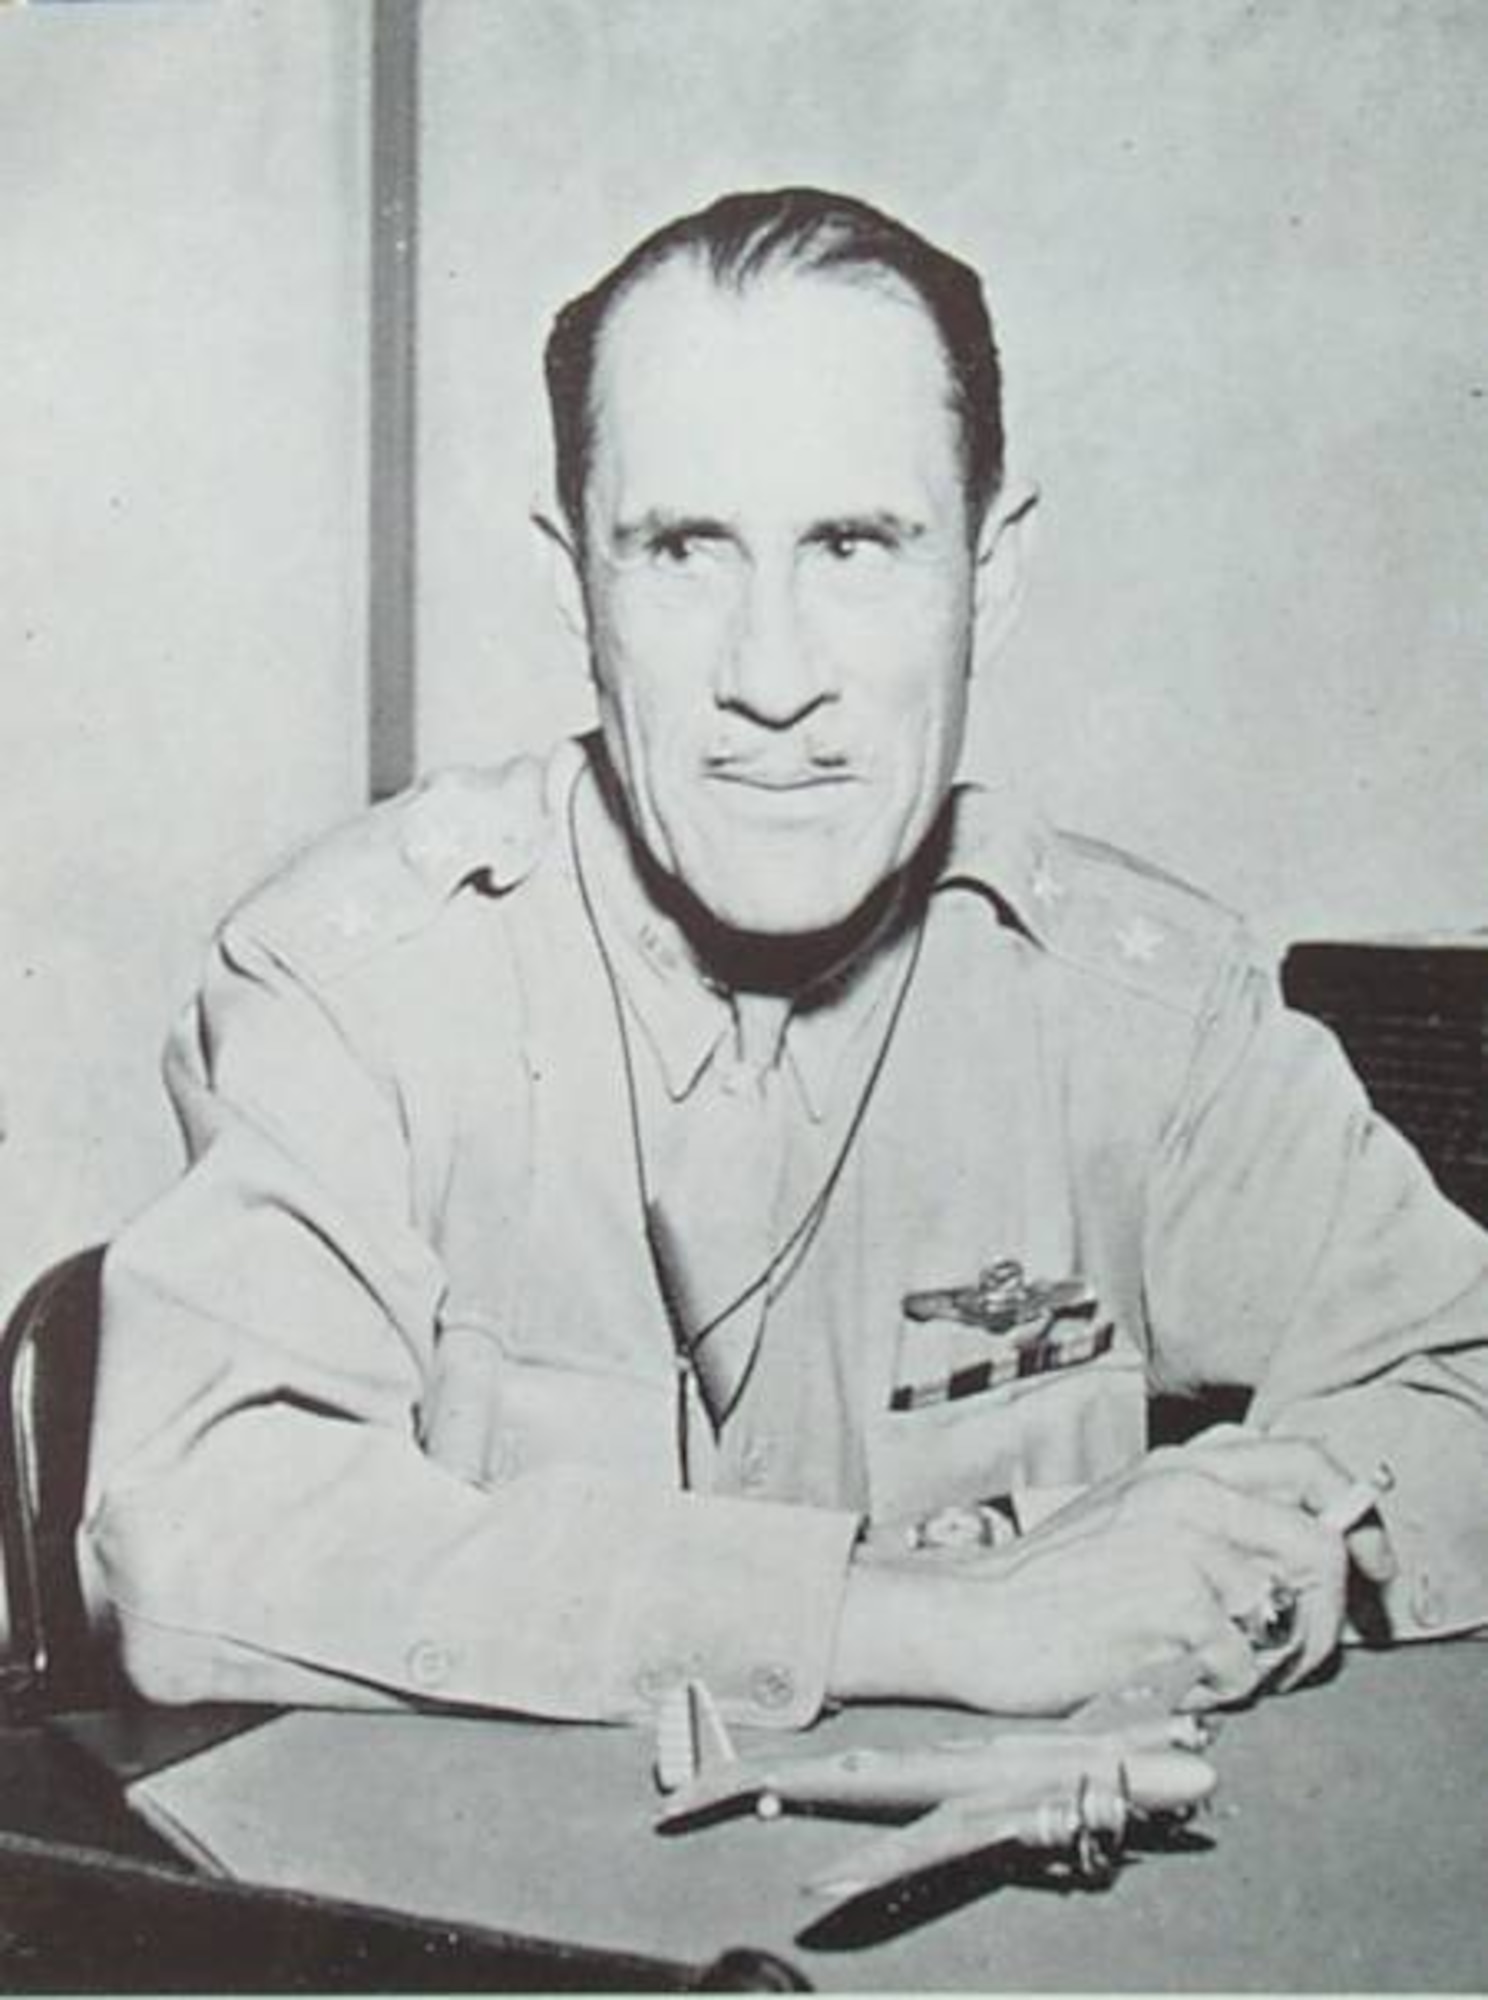 Maj Gen Clarence Tinker
Seventh Air Force Commander
Historic portrait